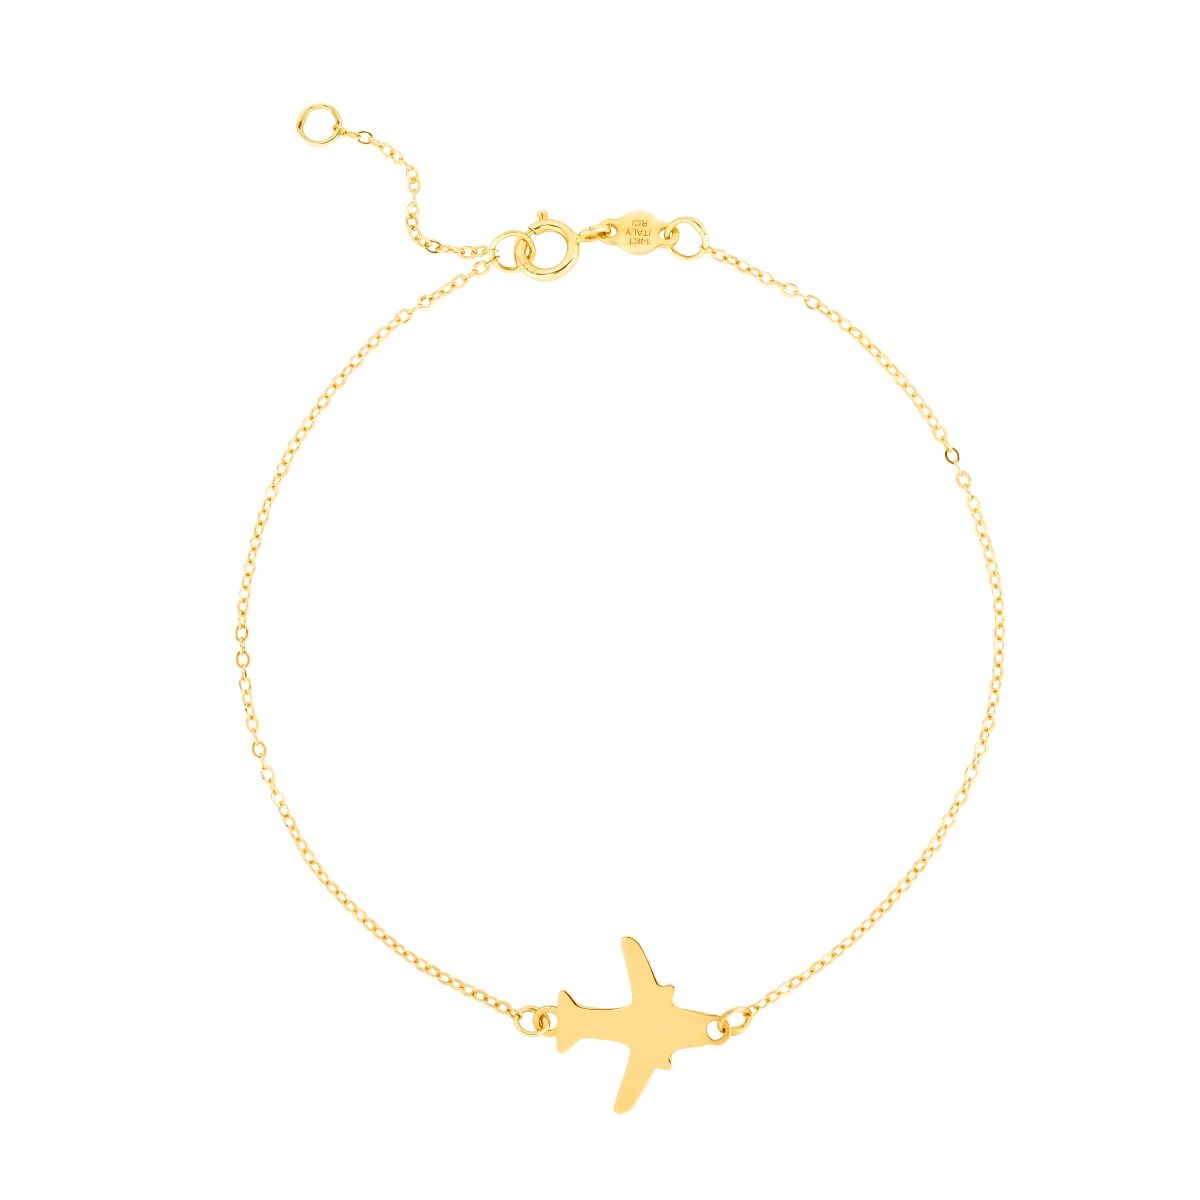 Unisex Anchor Airplane Bracelets Charm Survival Rope Chain Hooks Fashion  Jewelry | eBay